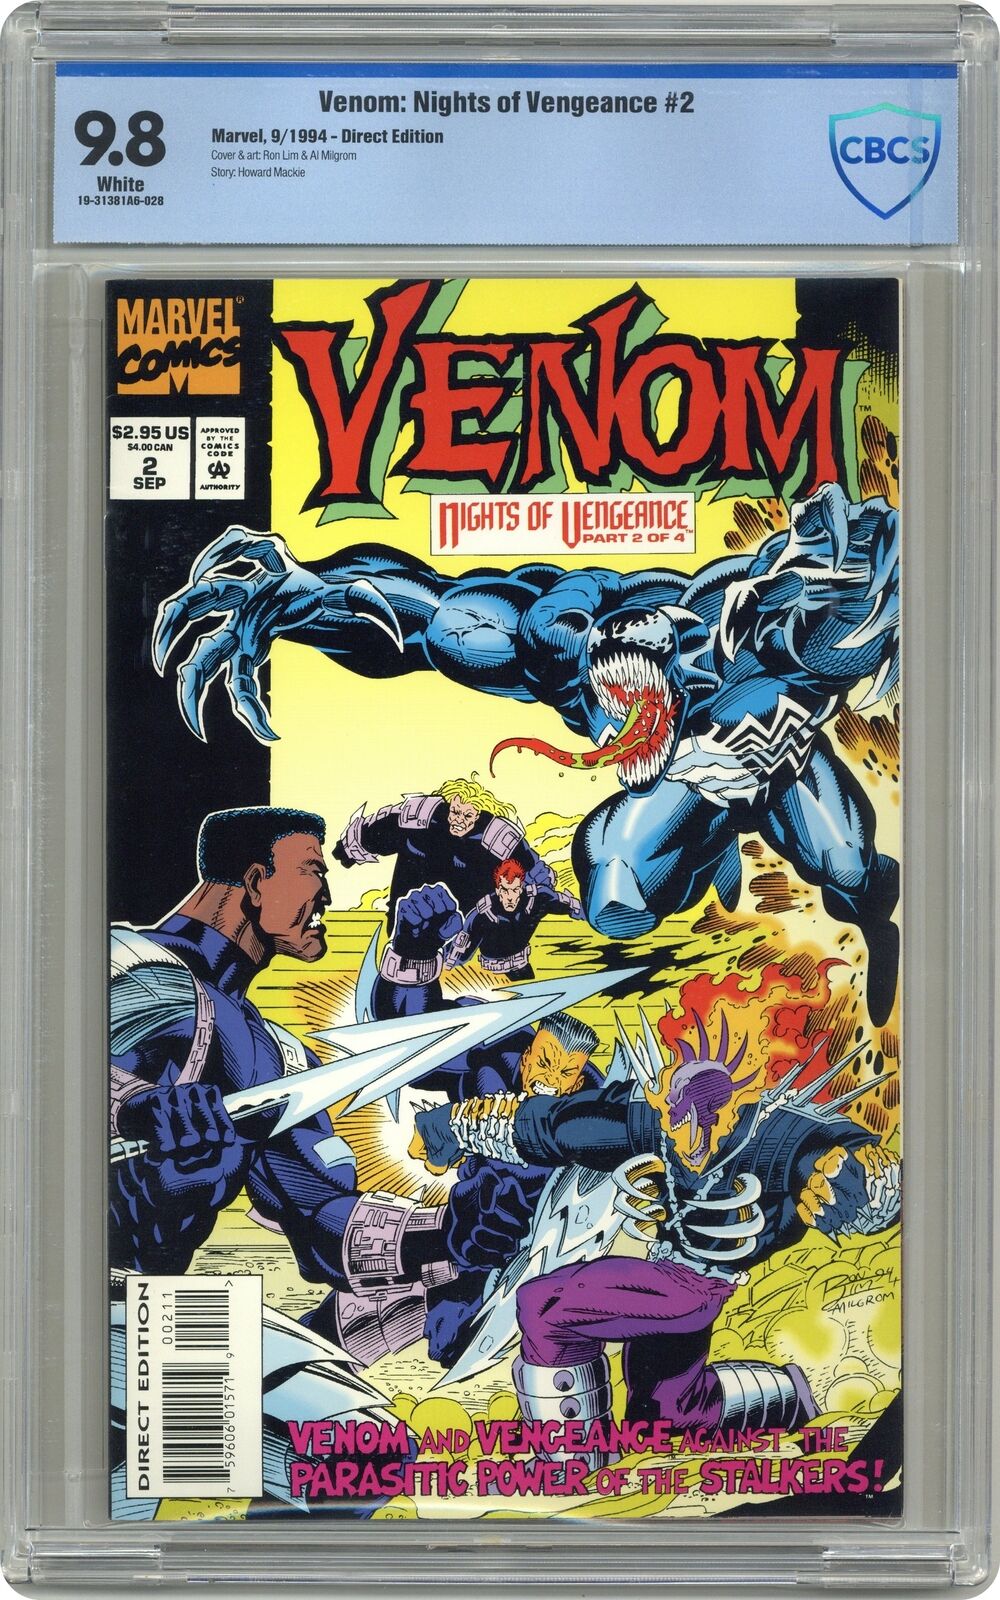 Venom Nights of Vengeance #2 CBCS 9.8 1994 19-31381A6-028